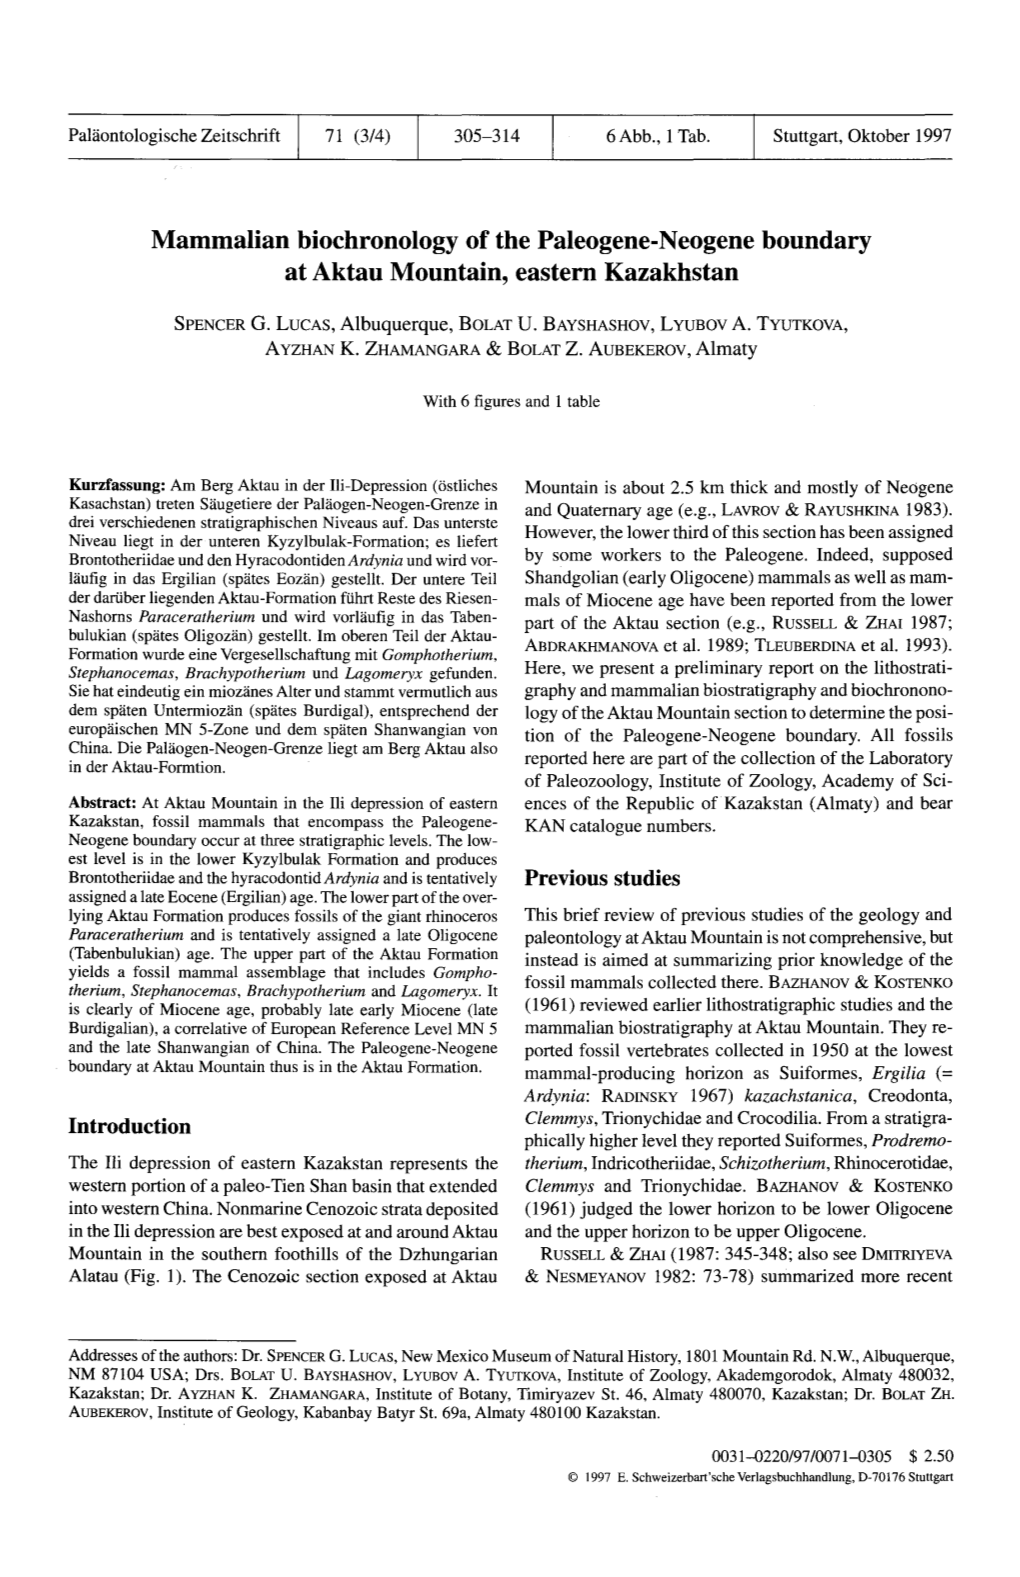 Mammalian Biochronology of the Paleogene-Neogene Boundary at Aktau Mountain, Eastern Kazakhstan